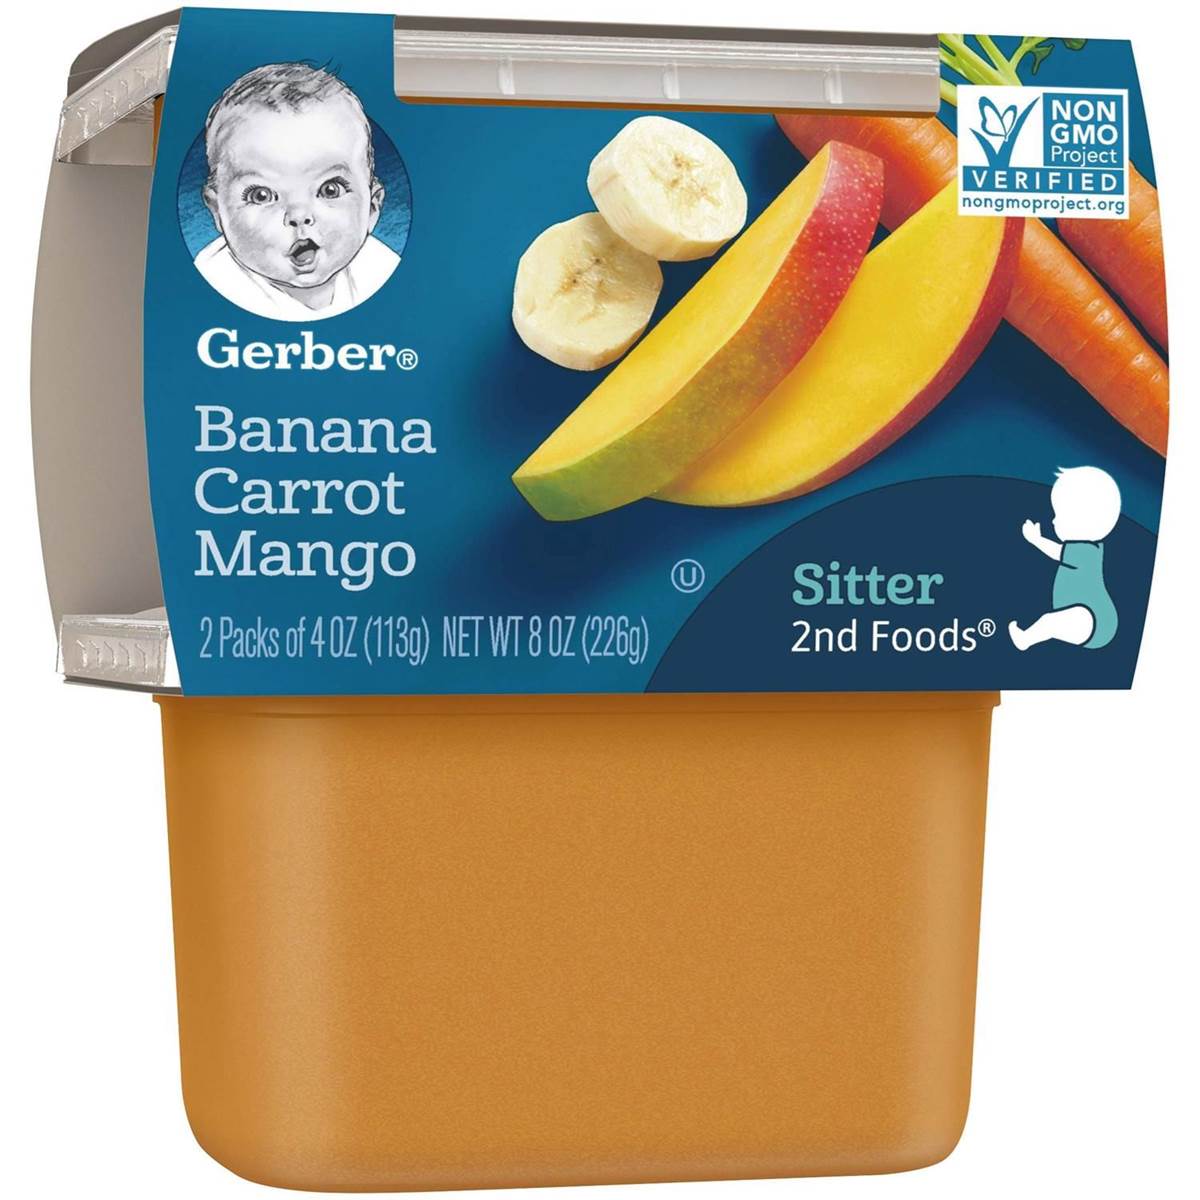 Gerber 2nd Foods for Sitter - Banana Carrot Mango